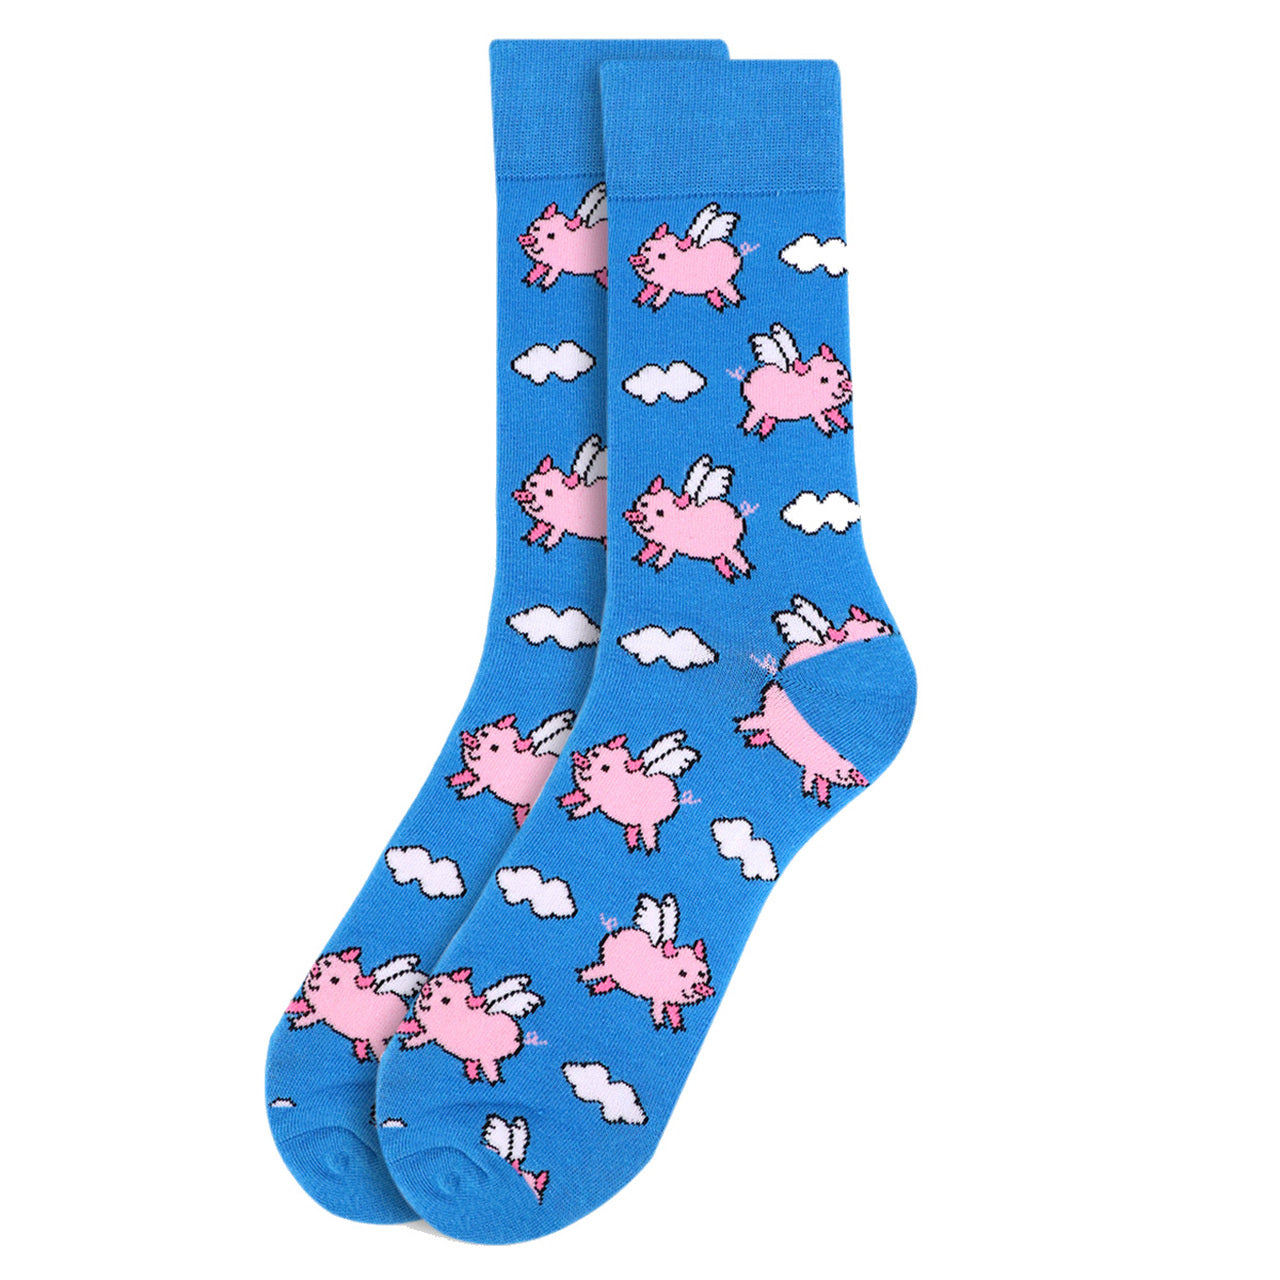 Fun Socks Men's Flying Pigs Novelty Socks Blue and Pink Pig Farm Little Piggies Gift for Dad Gift for Pig Lover